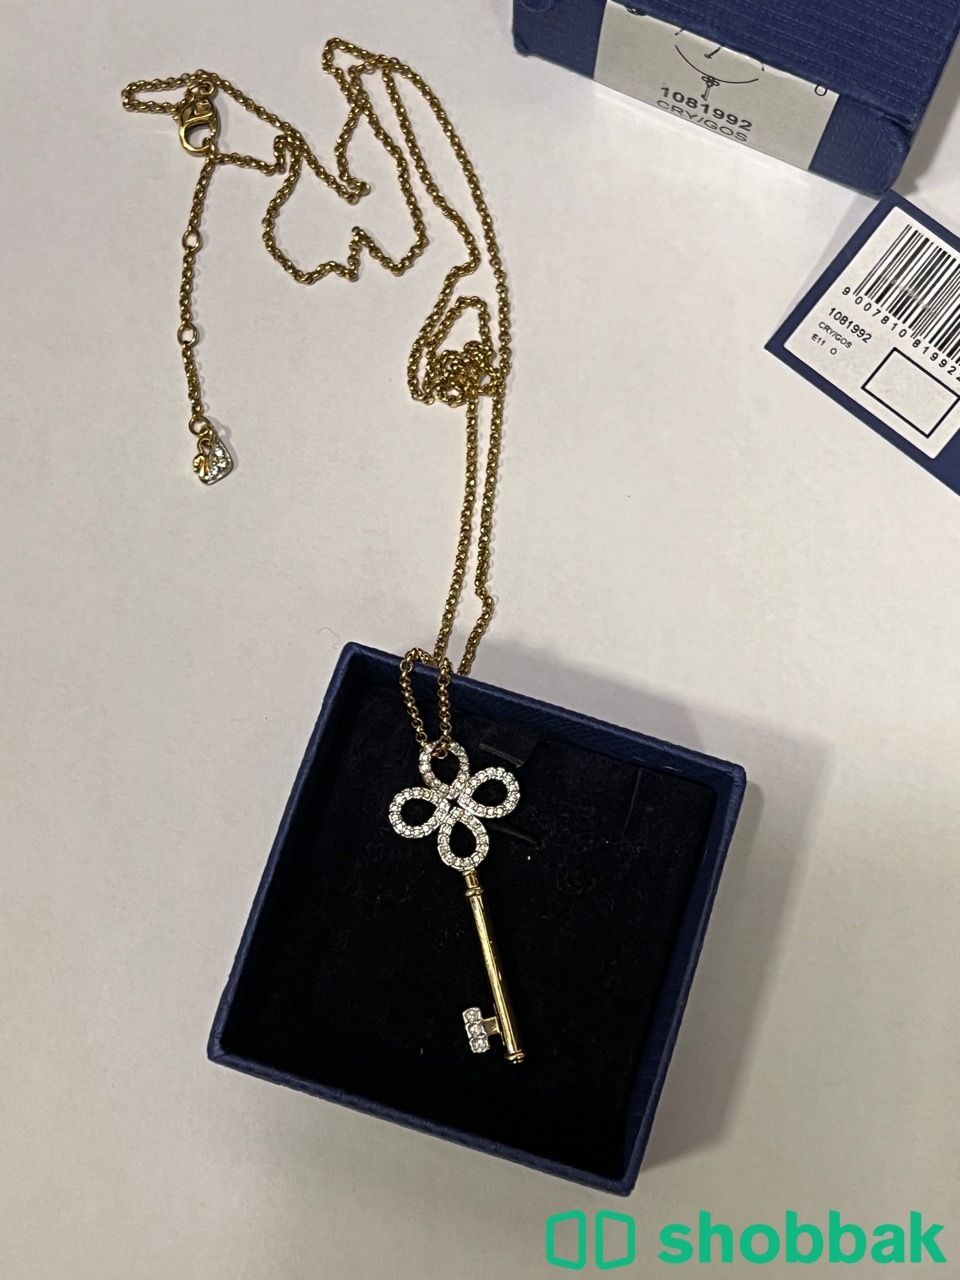 Swarovski Key Necklace. عقد مفتاح شوارفسكي. Shobbak Saudi Arabia